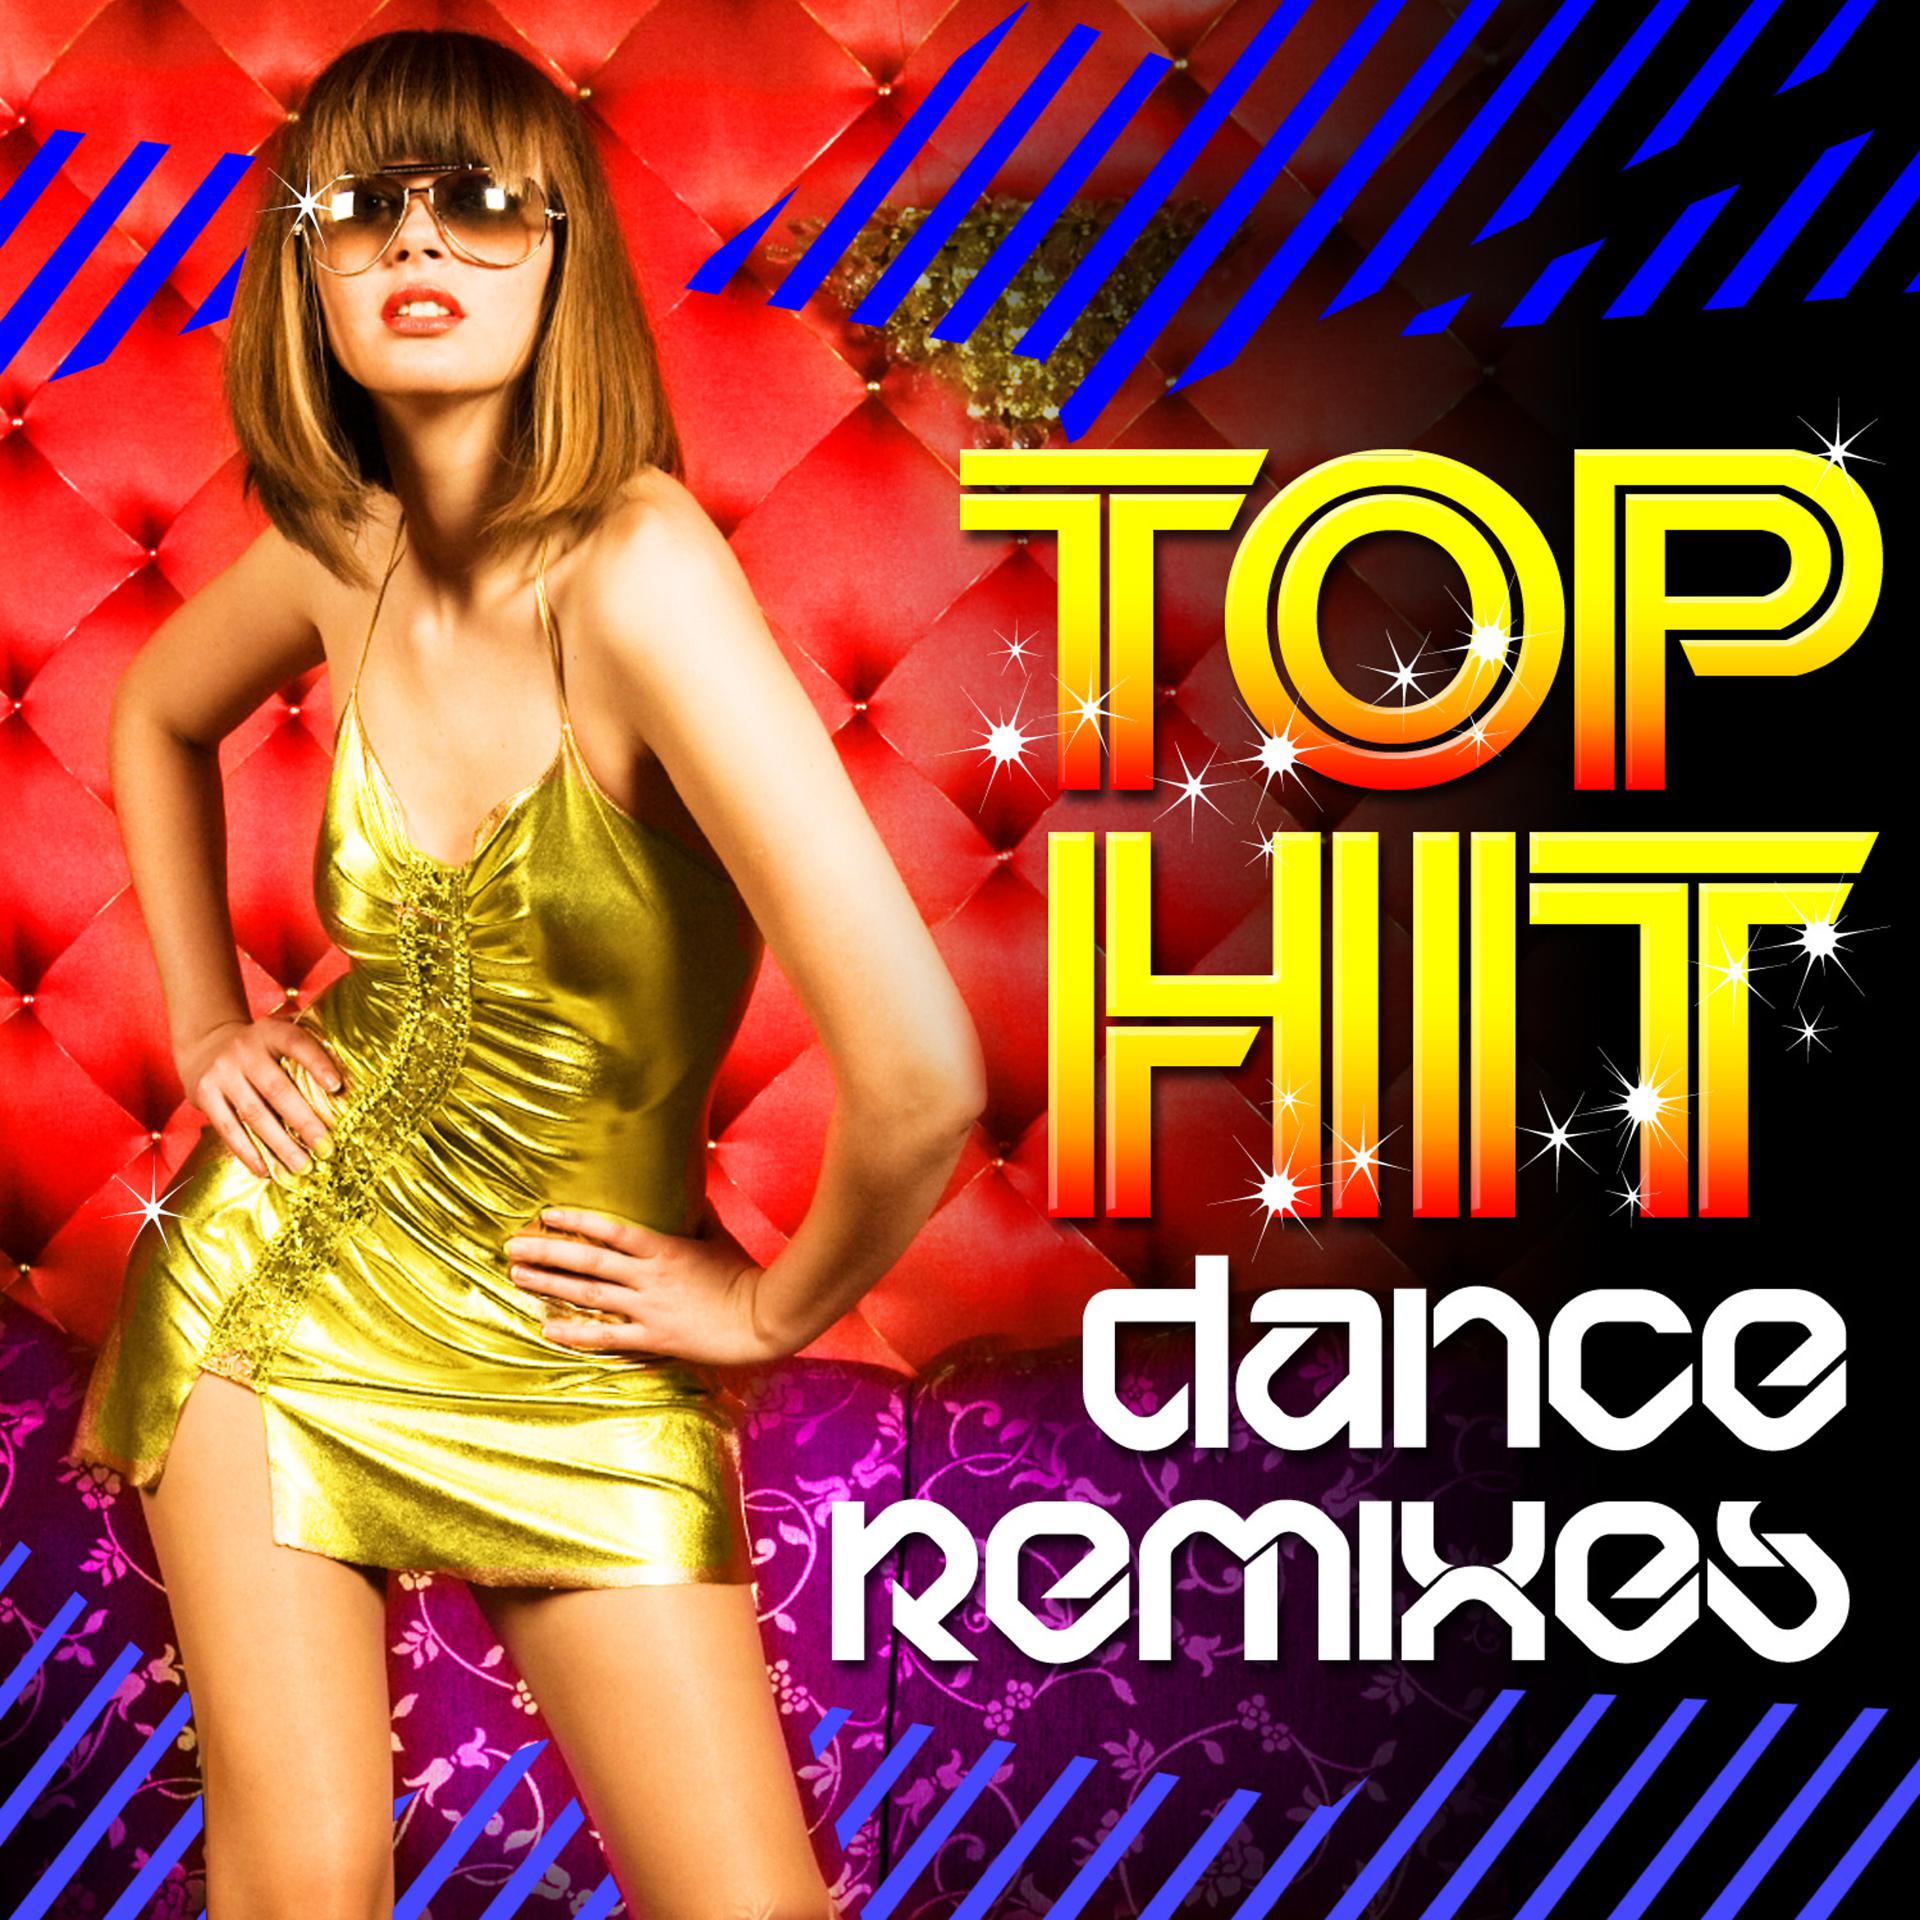 Dancing remix mp3. Dance Remixes. Паранойя дэнс ремикс. Remix Dance 128. Ремикс танец.